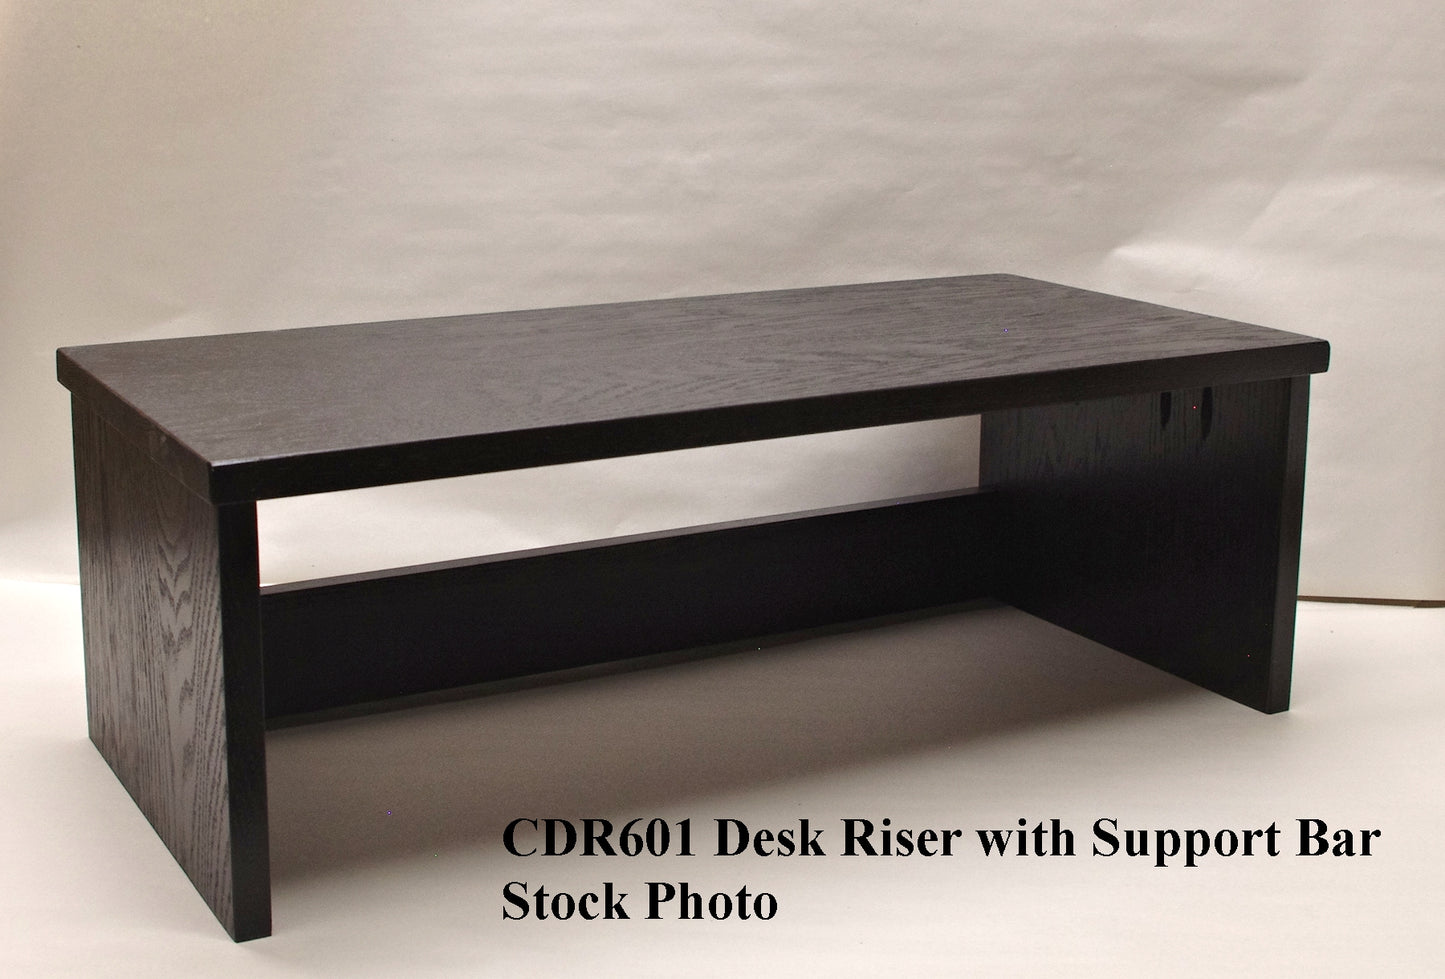 CDR601 Desk Riser with Support Bar - 44" Length